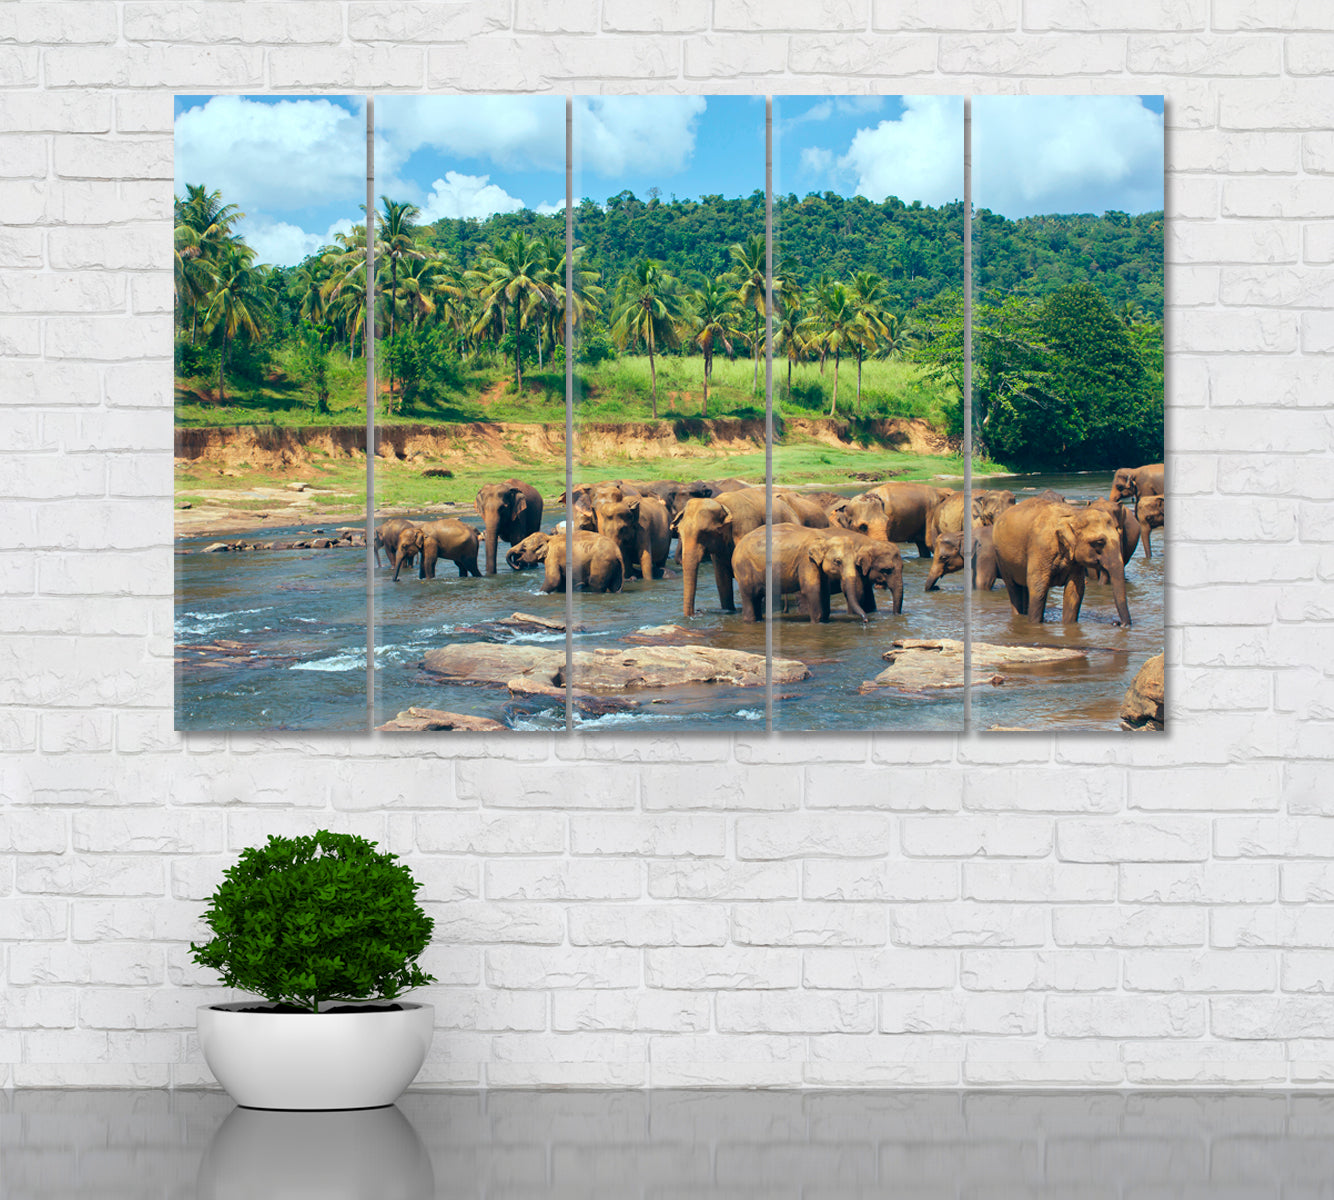 Sri Lanka Elephants in Jungle Canvas Print ArtLexy 5 Panels 36"x24" inches 